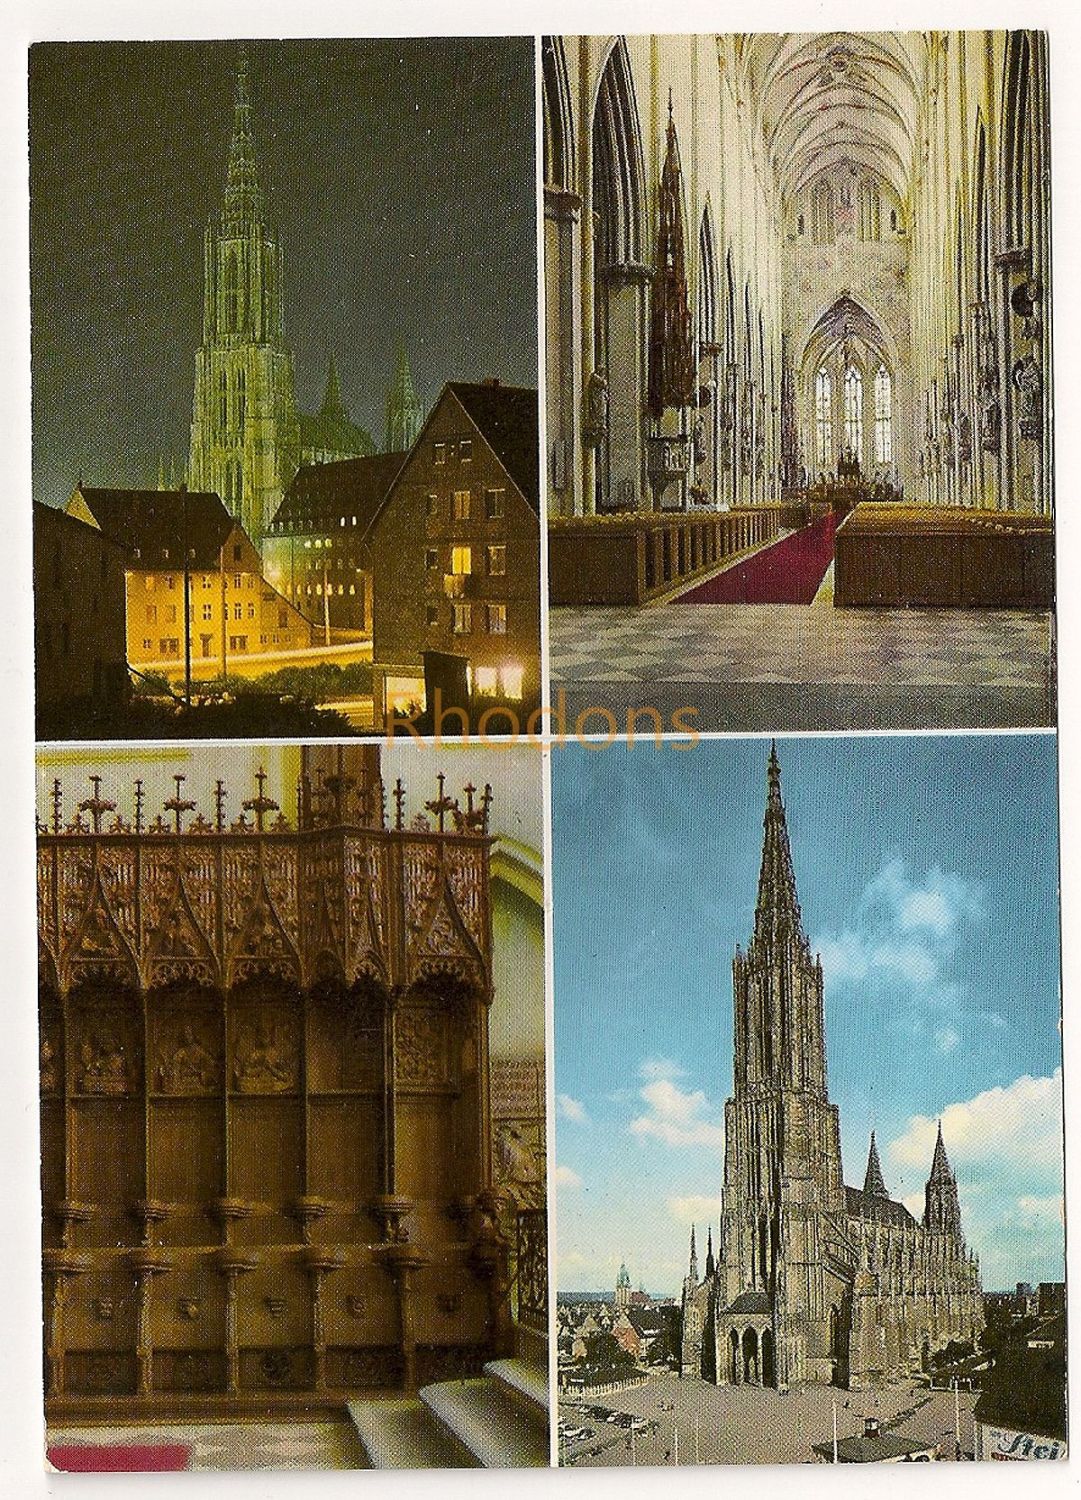 Germany: Ulm / Donnau. Das Munster, Ulm Minster. Multiview Colour Photo Pos